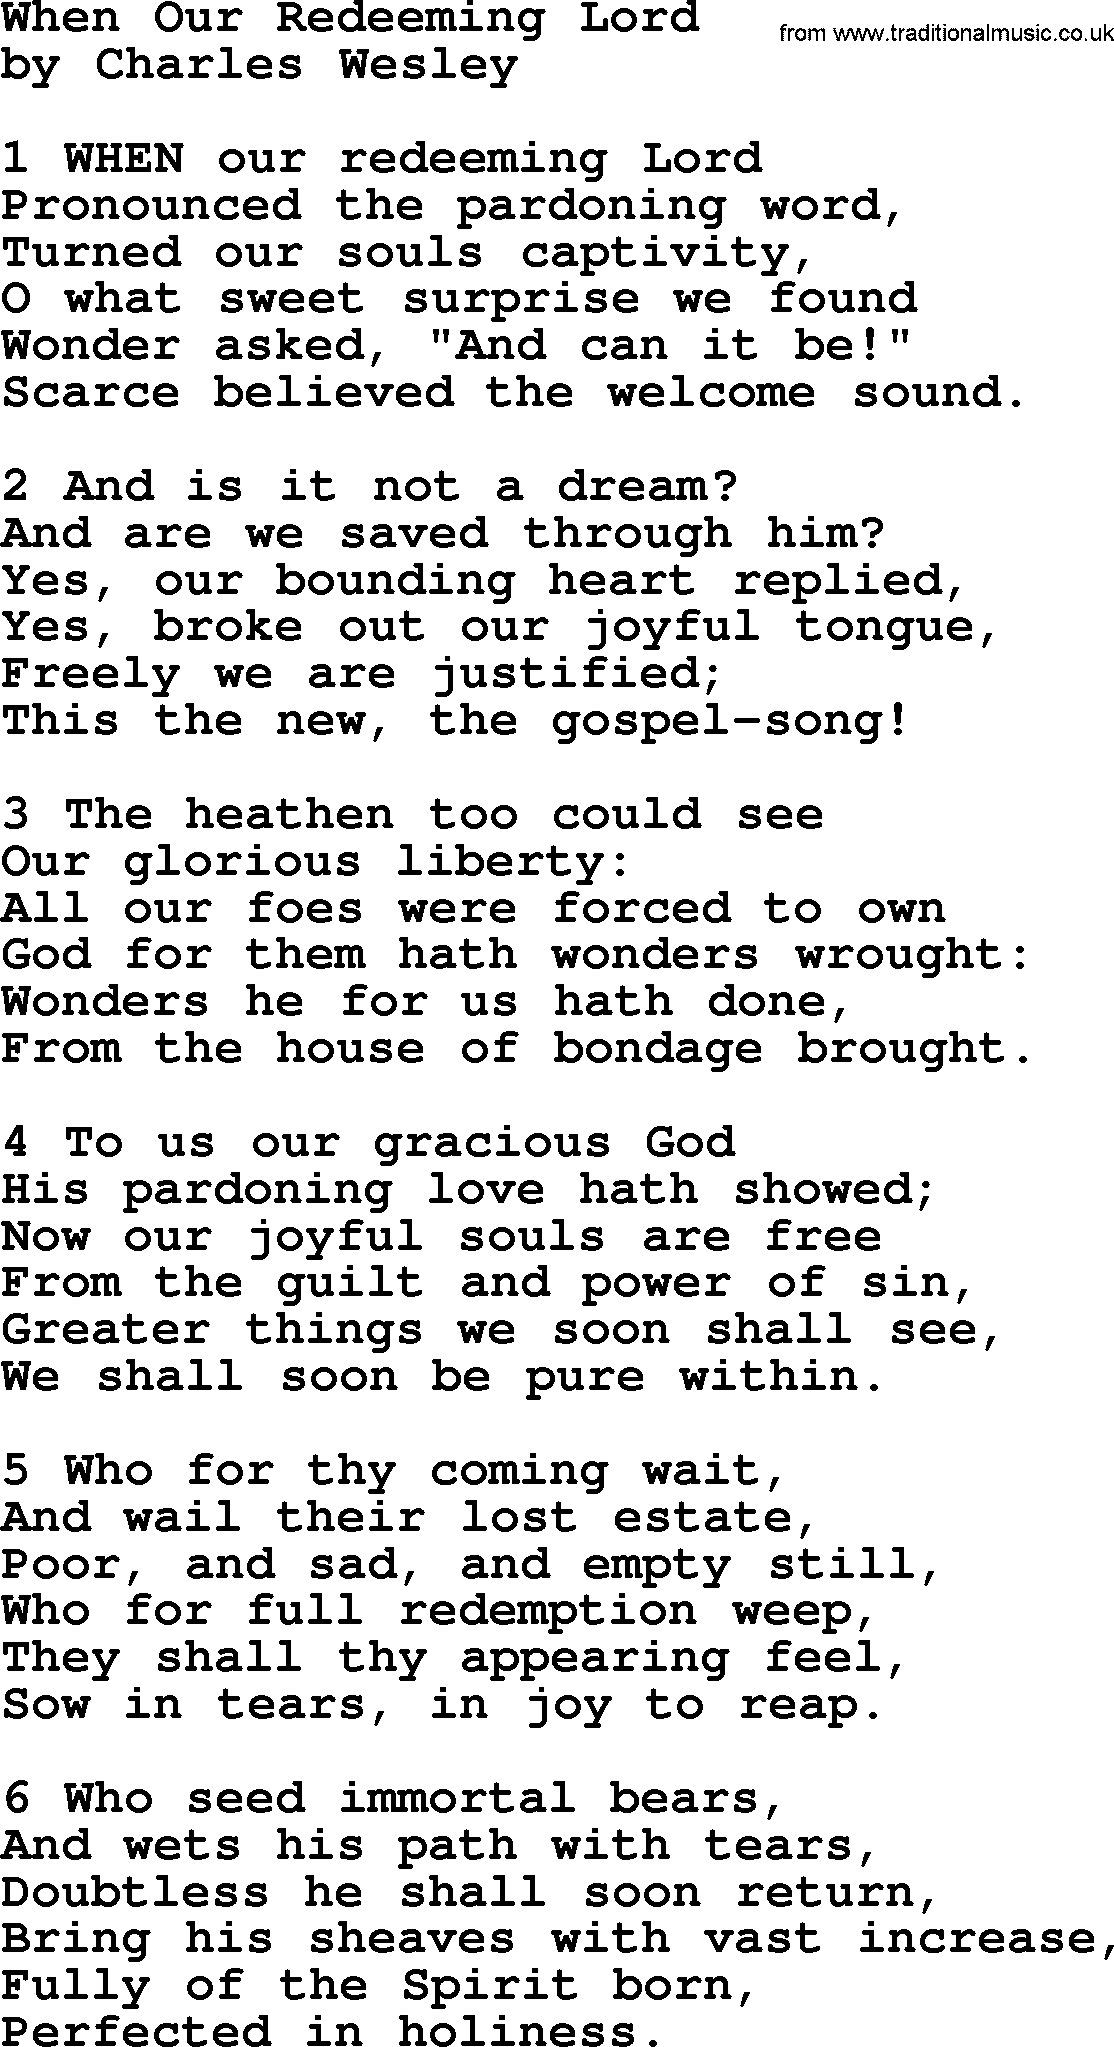 Charles Wesley hymn: When Our Redeeming Lord, lyrics